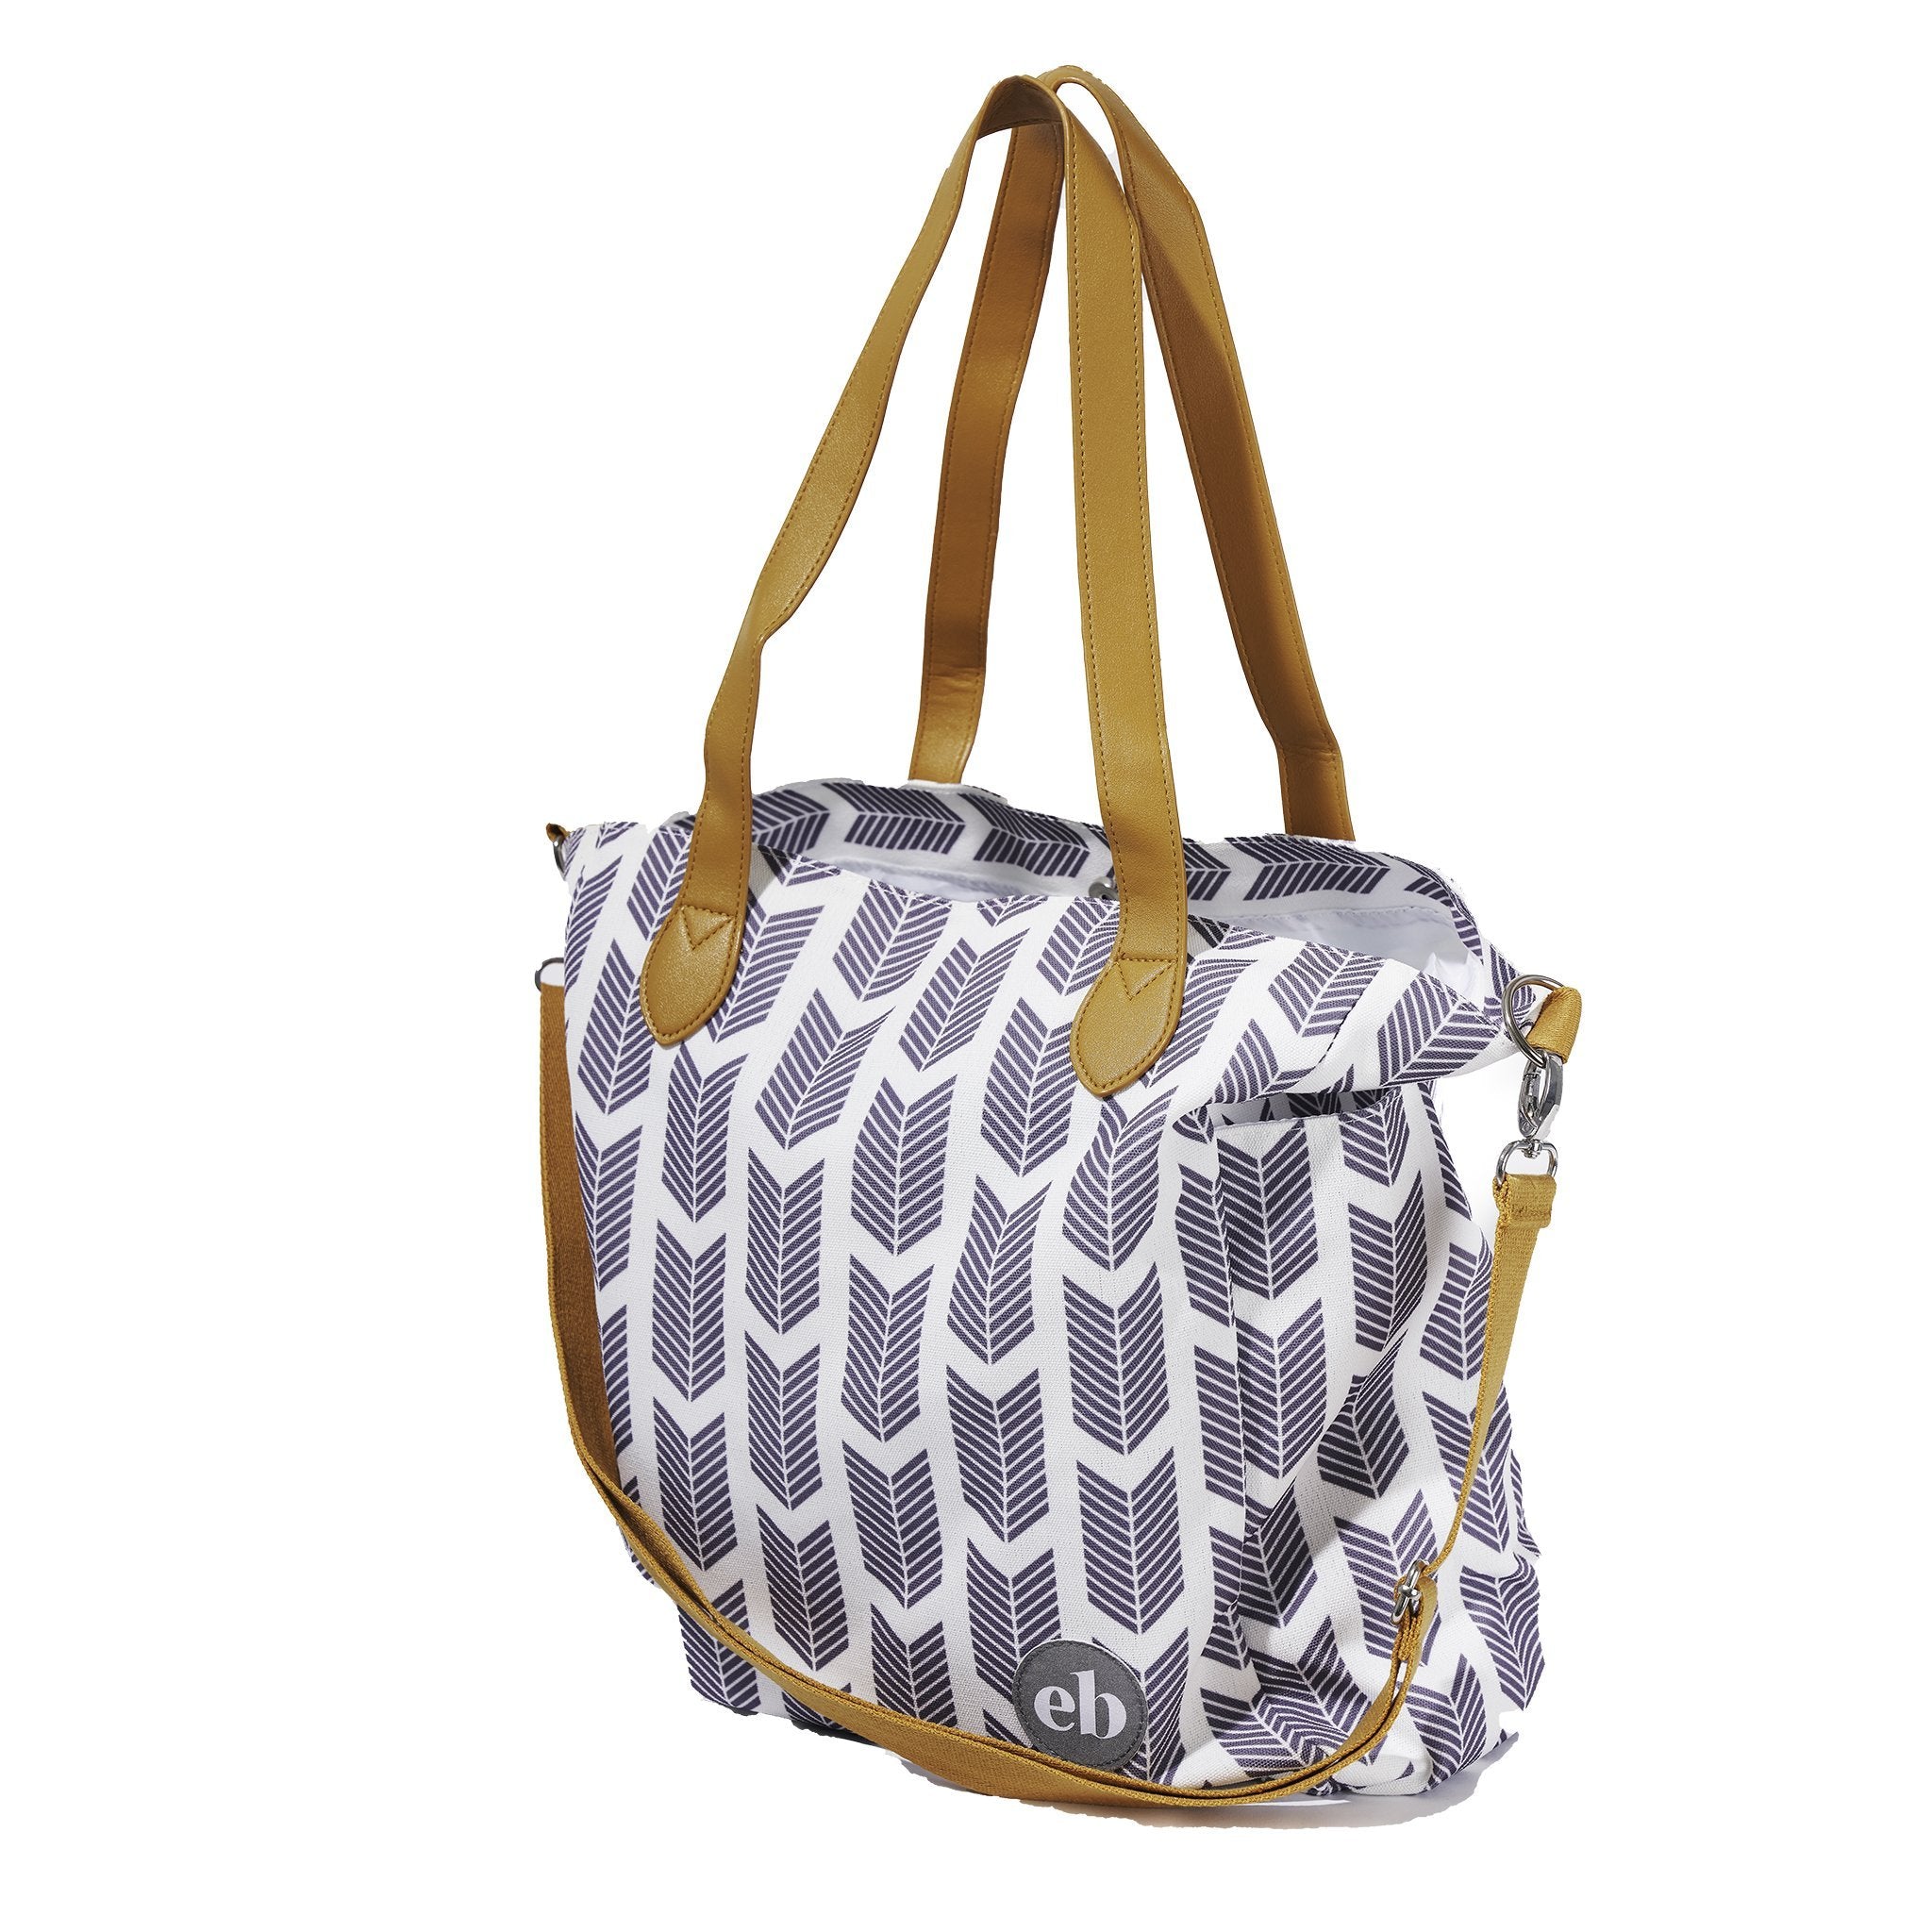 Grey Canvas Tote | Diaper Bag Satchel | Baby Diaper Bag with Changing Pad, Shoulder Strap, & Crossbody Strap | Travel Tote Bag - EliteBaby